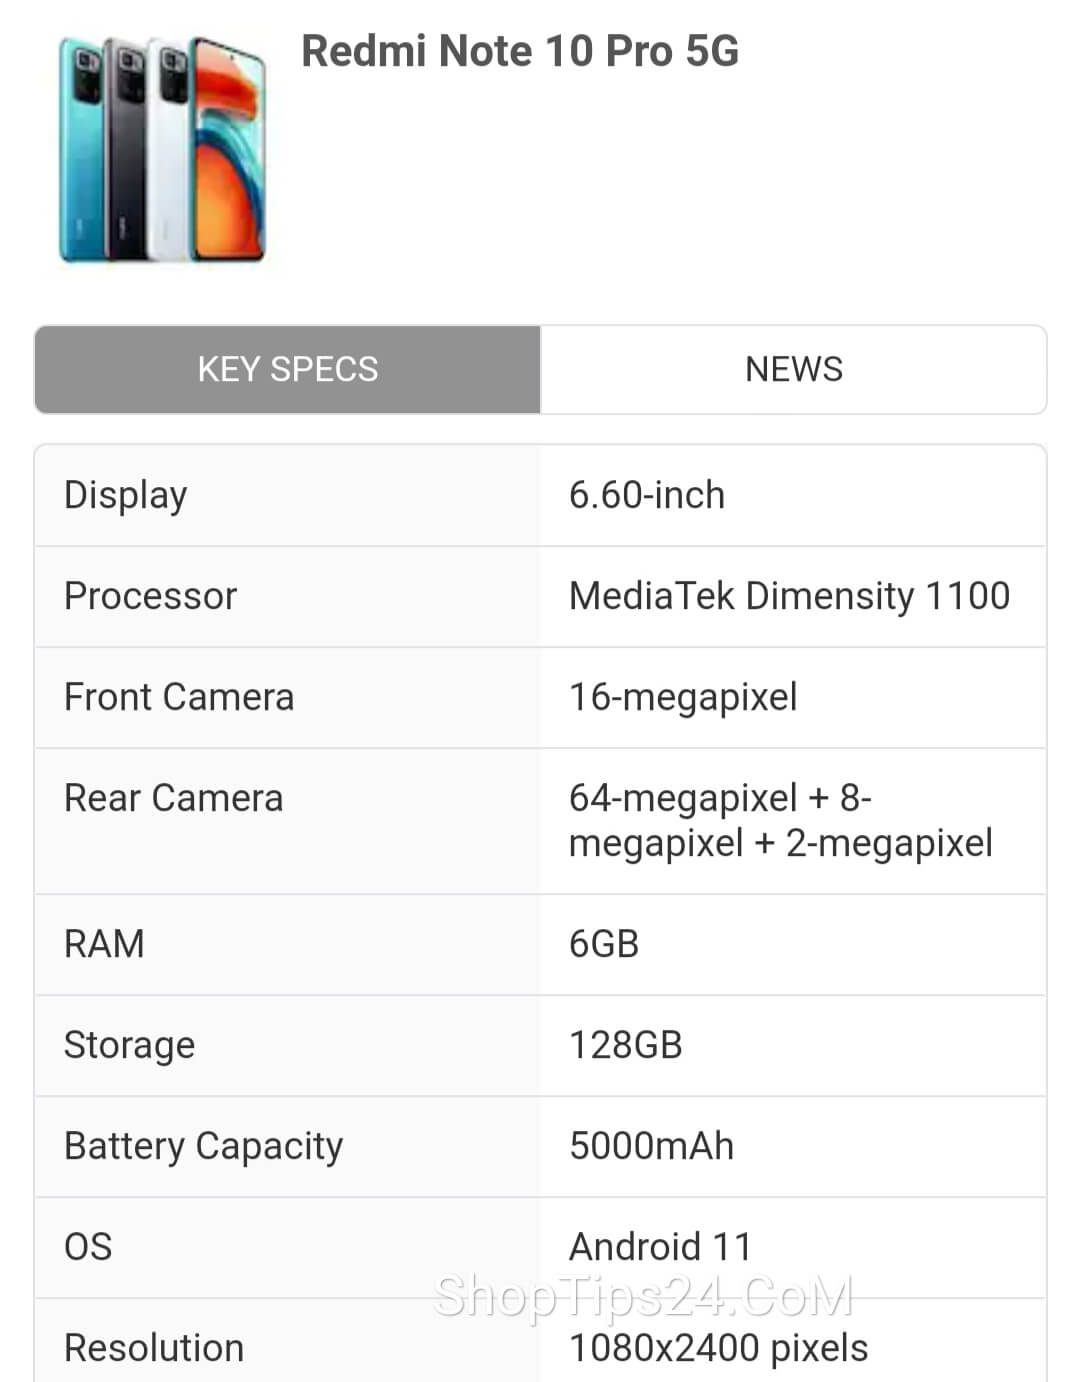 details. Redmi Note 10 Pro 5G Redmi Note 10 Pro 5G KEY SPECS NEWS Display 6.60-inch Processor MediaTek Dimensity 1100 Front Camera 16-megapixel Rear Camera 64-megapixel + 8-megapixel + 2-megapixel RAM 6GB Storage 128GB Battery Capacity 5000mAh OS Android 11 Resolution 1080x2400 pixels Post your comments For ,MI 10I, REDMI NOTE 10 BATTERY,REDMI NOTE 10 CAMERAS, REDMI NOTE 10 FEATURES, REDMI NOTE 10 PRICE, REDMI NOTE 10 PRICE IN INDIA |REDMI NOTE 10 PRO, REDMI NOTE 10 PRO BATTERY, REDMI NOTE 10 PRO CAMERAS |REDMI NOTE 10 PRO FEATURES, REDMI NOTE 10 PRO MAX, REDMI NOTE 10 PRO MAX BATTERY, REDMI NOTE 10 PRO MAX CAMERAS, REDMI NOTE 10 PRO MAX FEATURES, REDMI NOTE 10 PRO MAX PRICE,REDMI NOTE 10 PRO MAX PRICE IN INDIA |REDMI NOTE 10 PRO MAX SPECIFICATIONS, REDMI NOTE 10 PRO PRICE, REDMI NOTE 10 PRO PRICE IN INDIA, REDMI NOTE 10 PRO SPECIFICATIONS, REDMI NOTE 10 SERIES, REDMI NOTE 10 SPECIFICATIONS, REDMI NOTE SERIES |REDMI SMARTPHONES, REDMI SMARTPHONES WITH QUAD REAR CAMERAS, REDMIREDMI NOTE 10,SMARTPHONES WITH QUAD REAR CAMERA, XIAOMI |XIAOMI MI 10, realme x7 max, realme x7 max 5g, realme x7 5g, realme x7 max price in india, realme x7 max 5g price in india, realme x7 max 5g price, mediatek dimensity 1200, redmi note 10 pro 5g price in india, redmi note 11 pro 5g, note 10 pro 5g, xiaomi china,